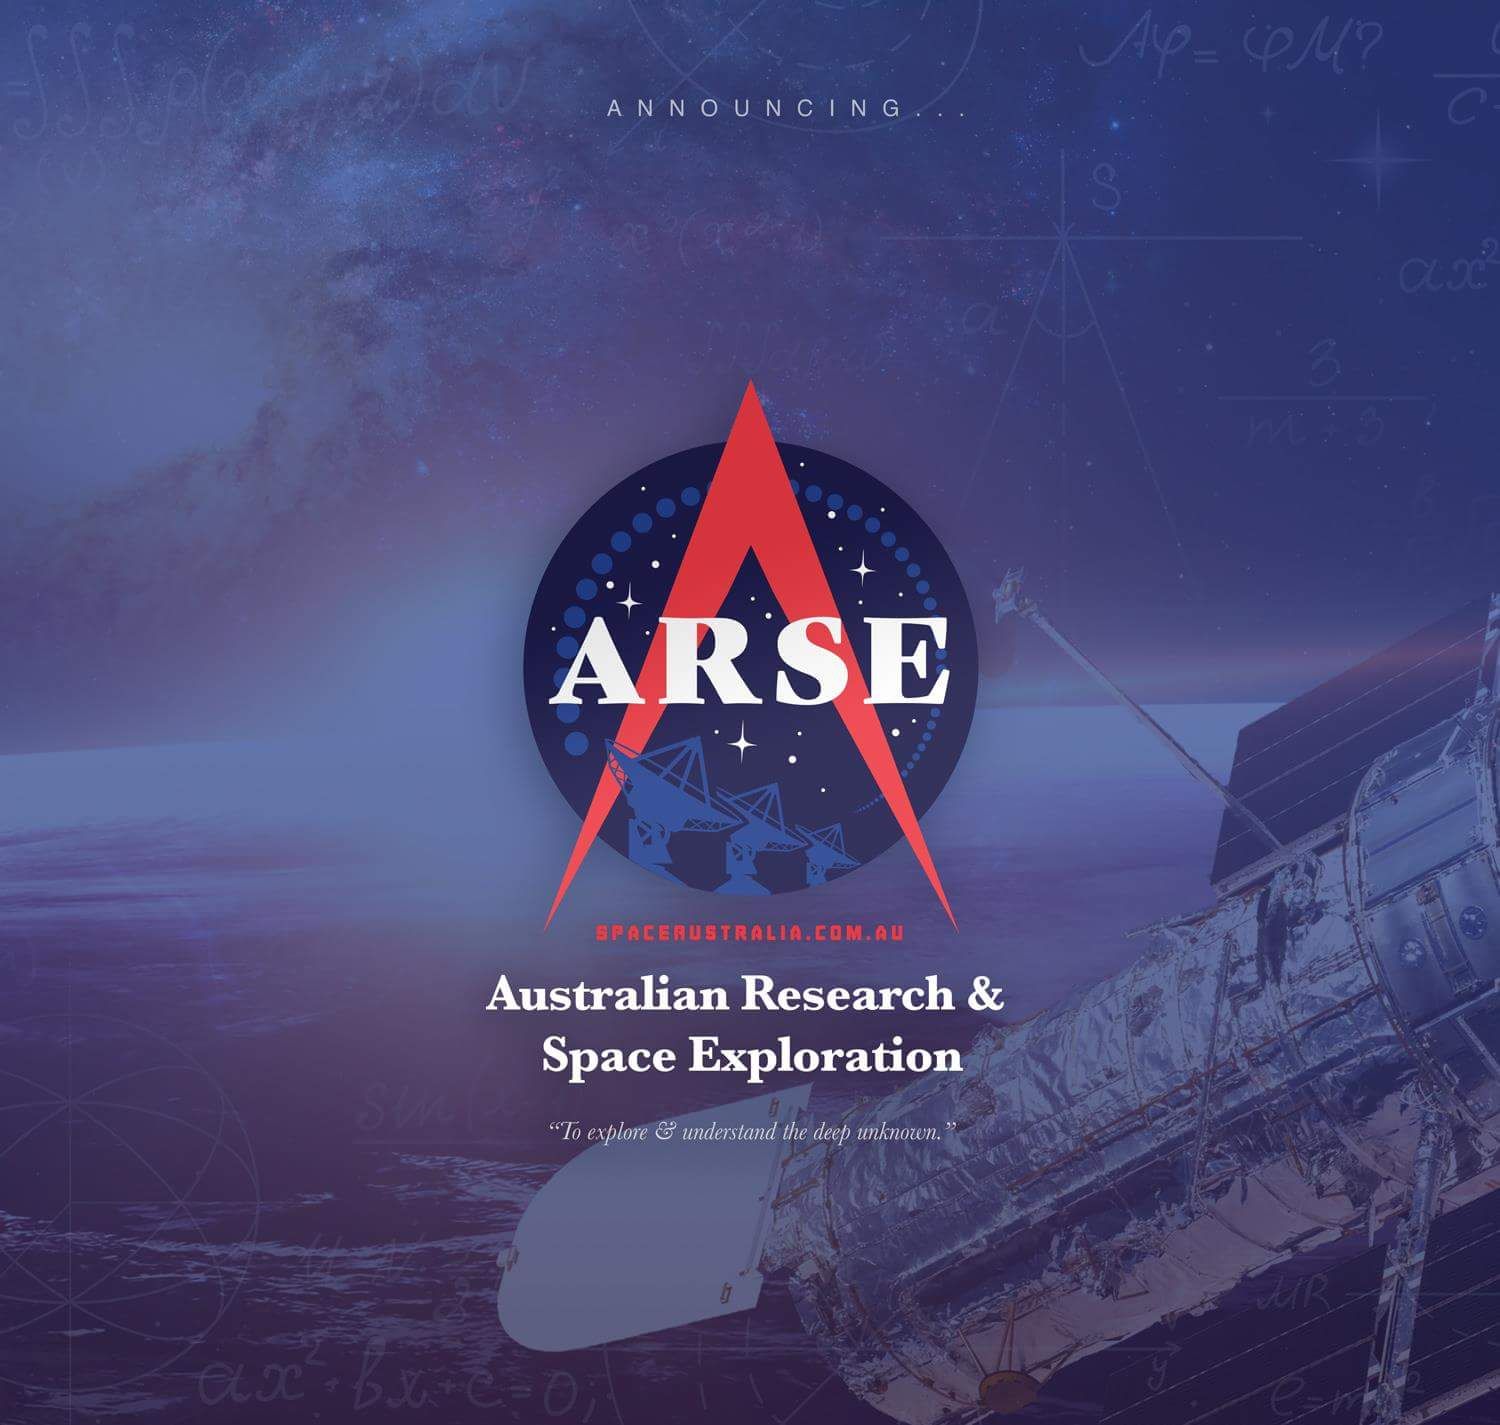 arse australian space - Announcing Arse Efacerustralia.Com.Au Australian Research & Space Exploration "To explore understand the deep unknown.